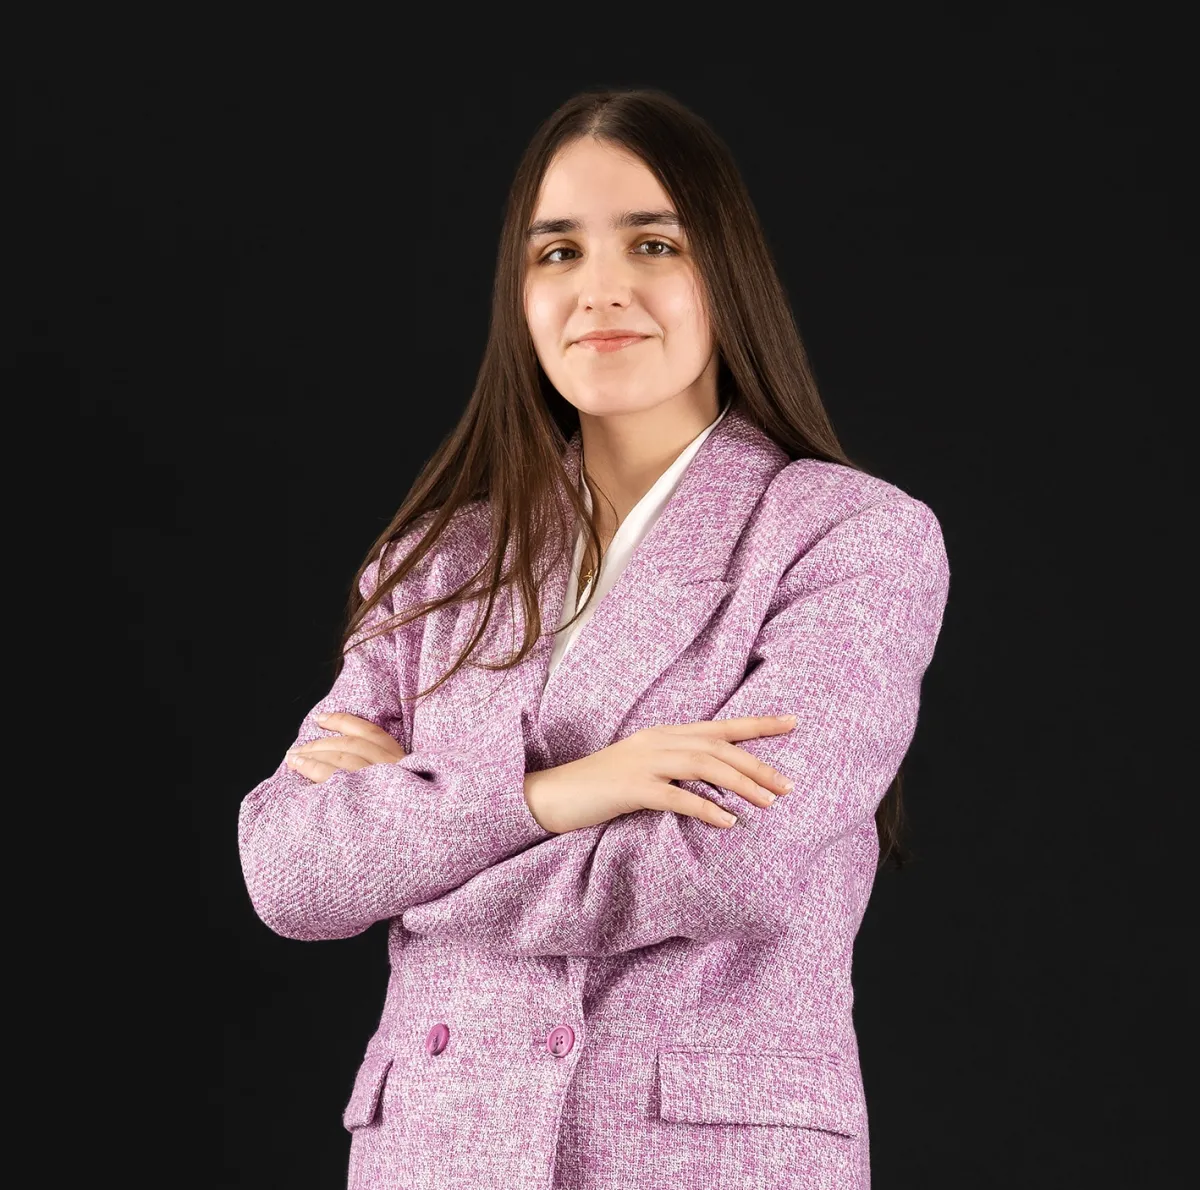 Gabriela Magalhães Sousa - Junior Consultant